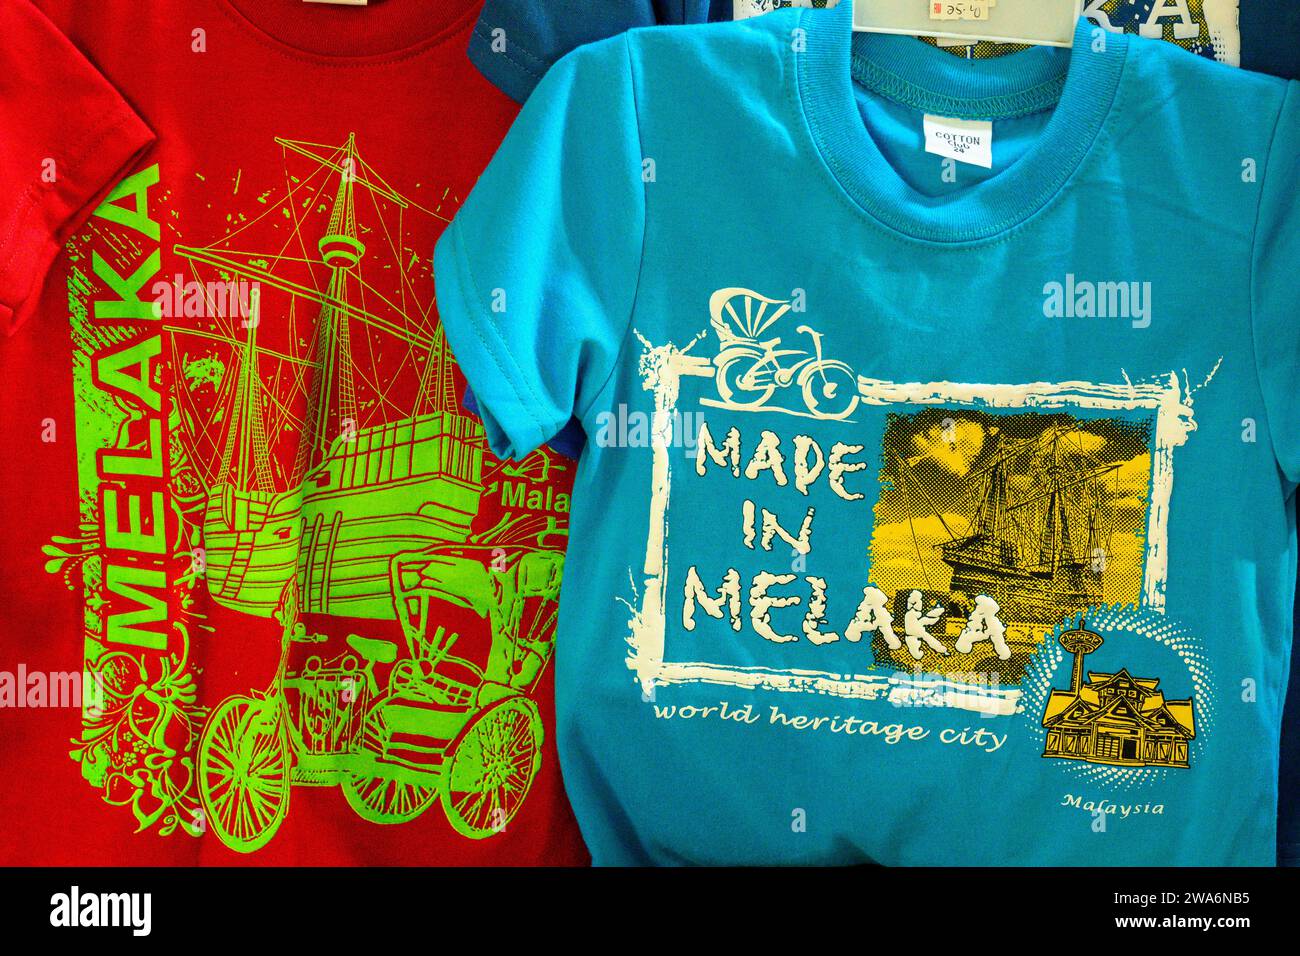 Souvenir Tee Shirts from Malacca, Malaysia Stock Photo